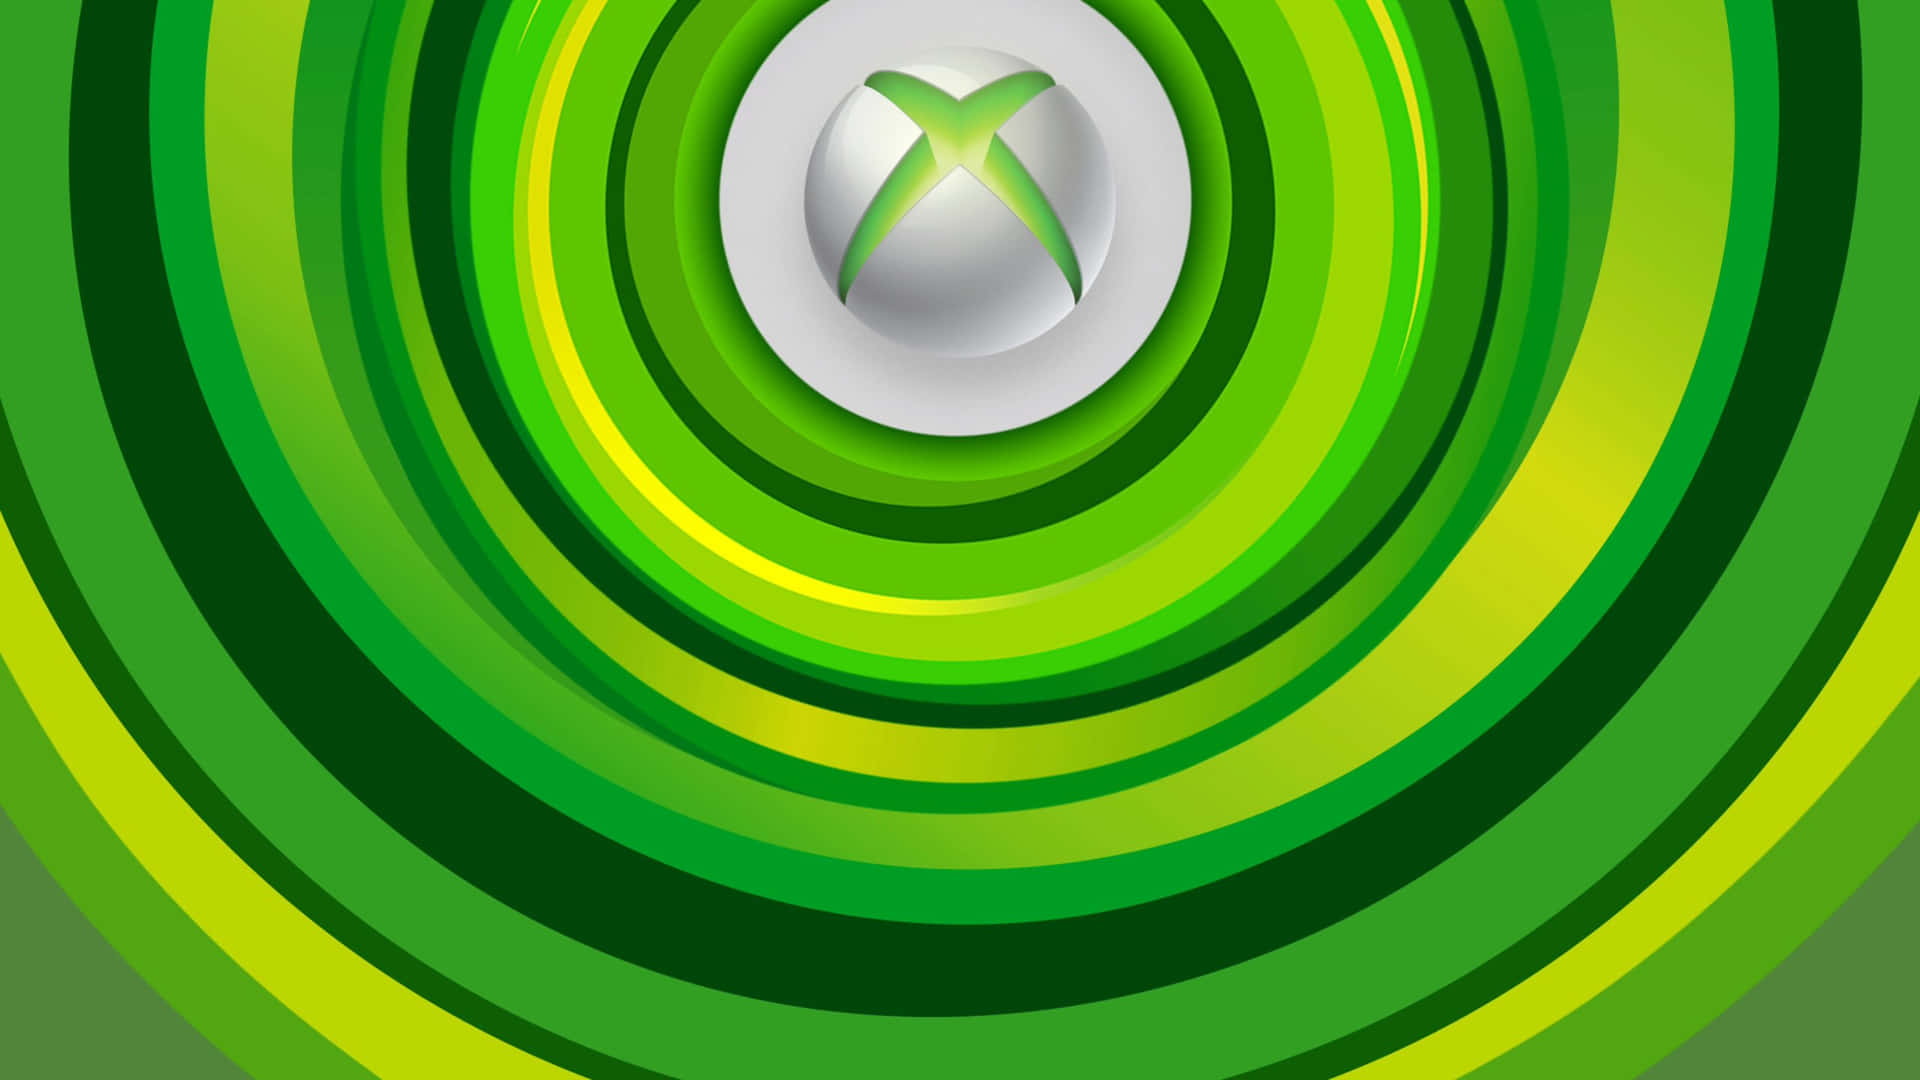 Papéis De Parede Do Xbox Live - Papéis De Parede Do Xbox Live.